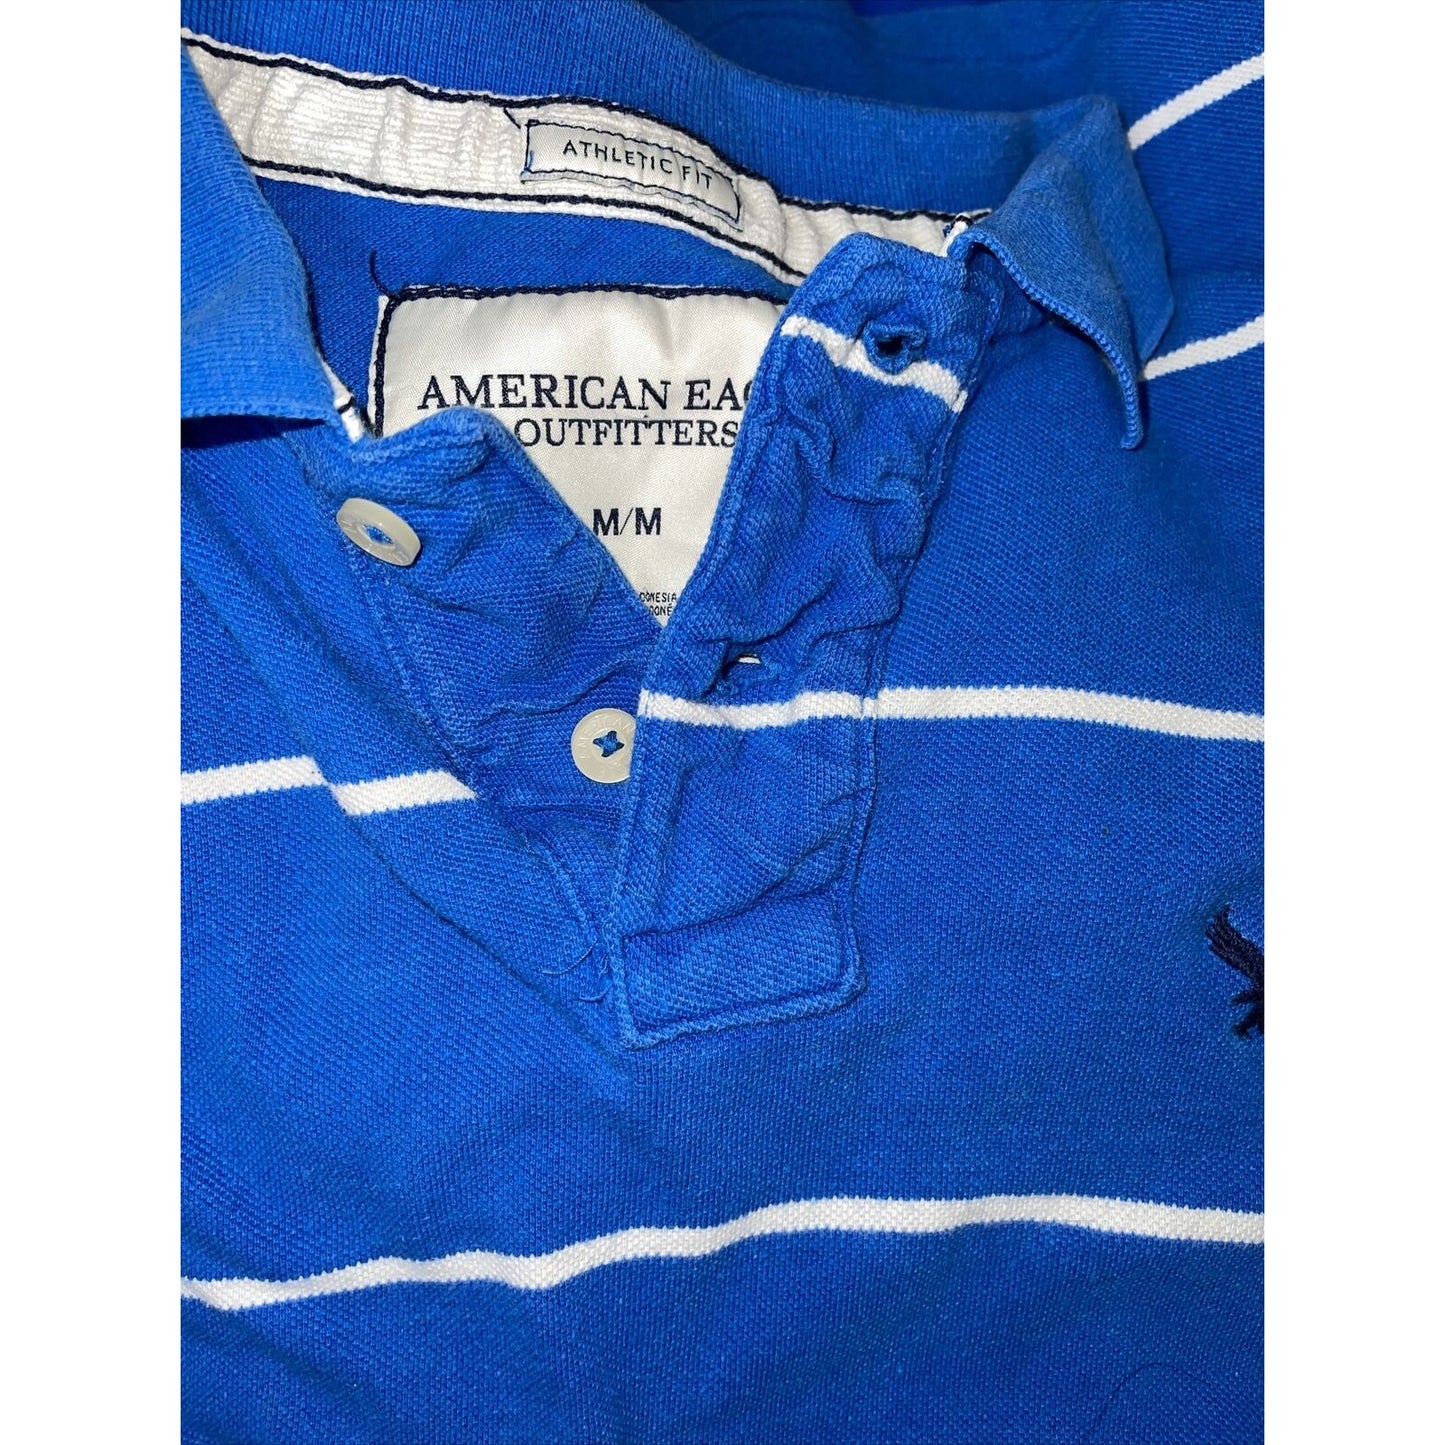 American Eagle Mens Polo Shirt Medium M Blue White Striped Short Sleeves Vintage